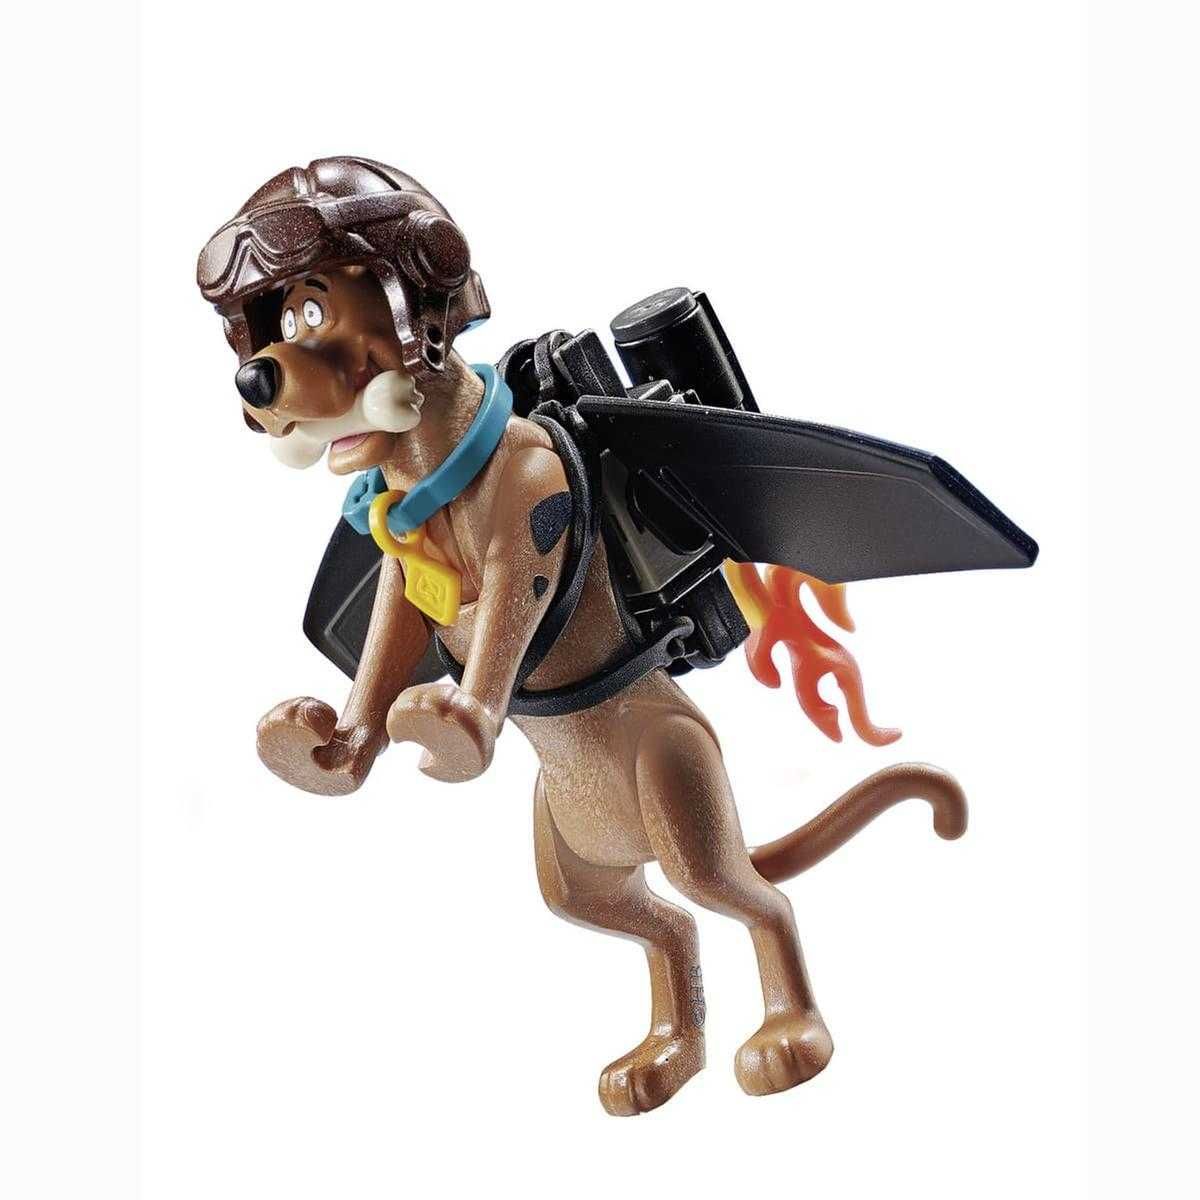 PROMO:Playmobil Scooby Doo 70711 piloto